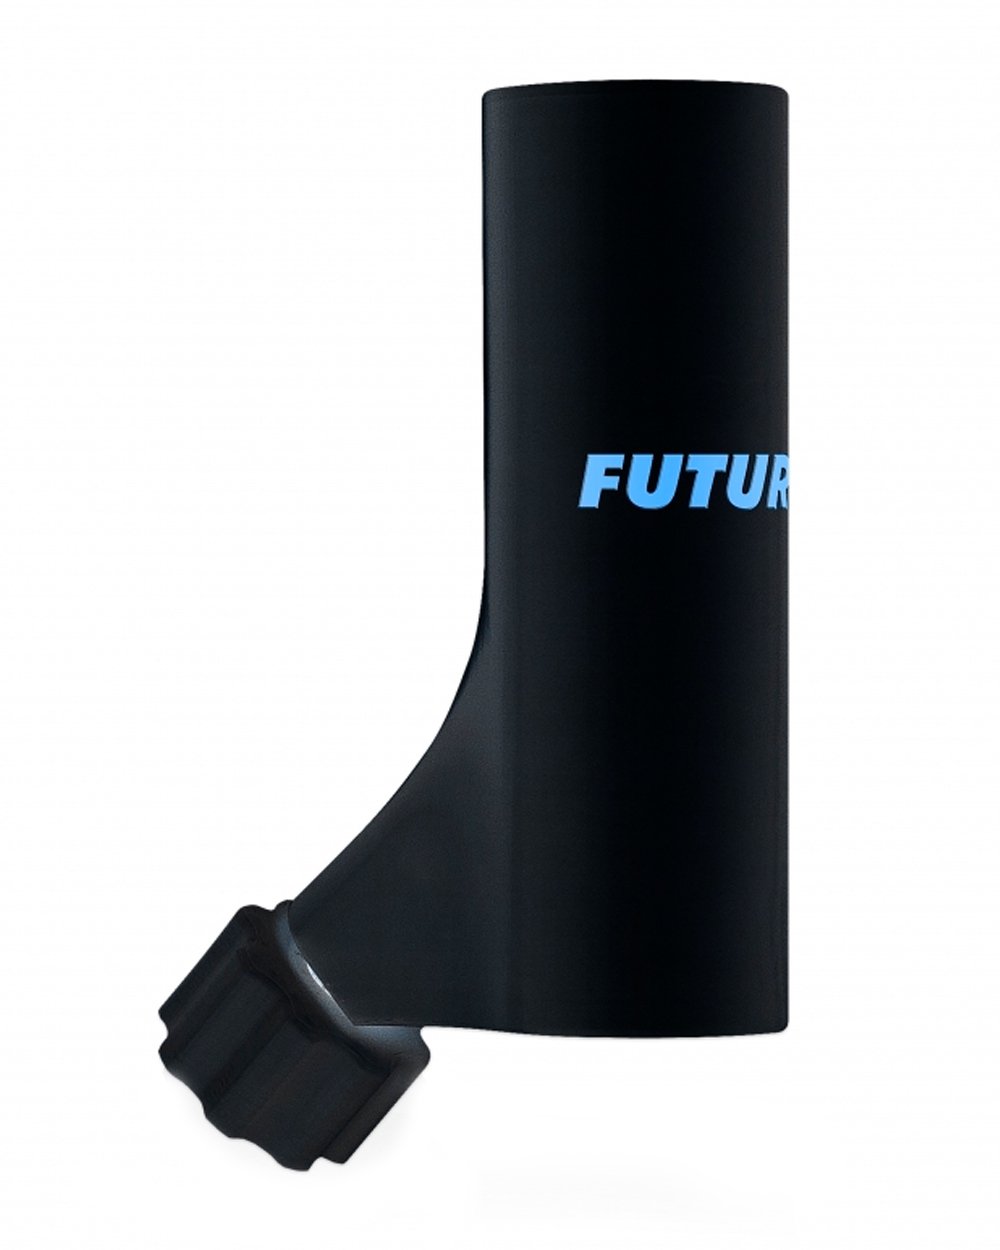 FUTUROLA | Venturi Steamer Head 31mm Attachment for CONE LOCK™ 3X Tubes| Label and Seal Cones & Cartridges - 2